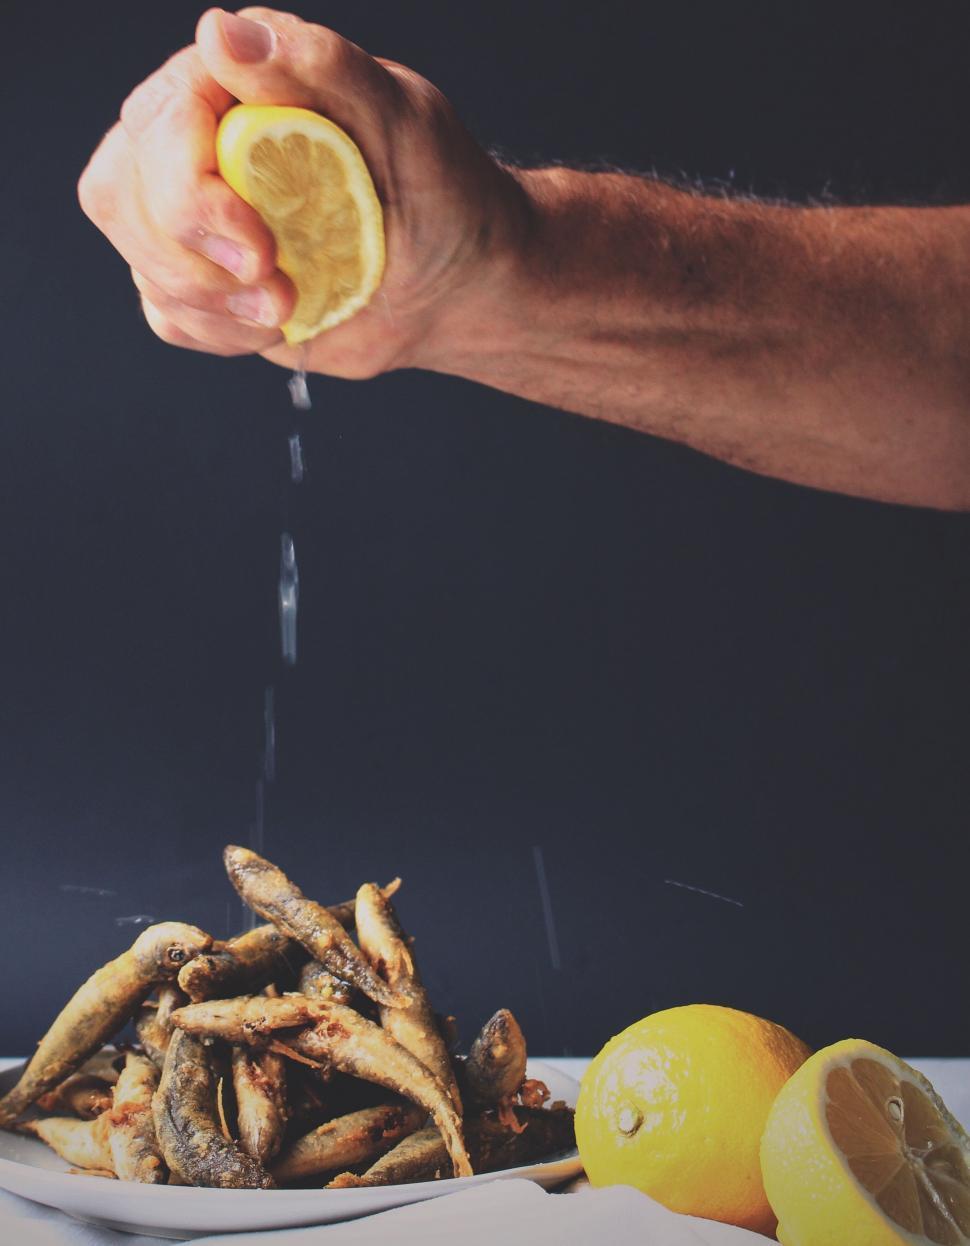 Free Image of Man Sprinkling Lemon on Plate of Fried Fish 